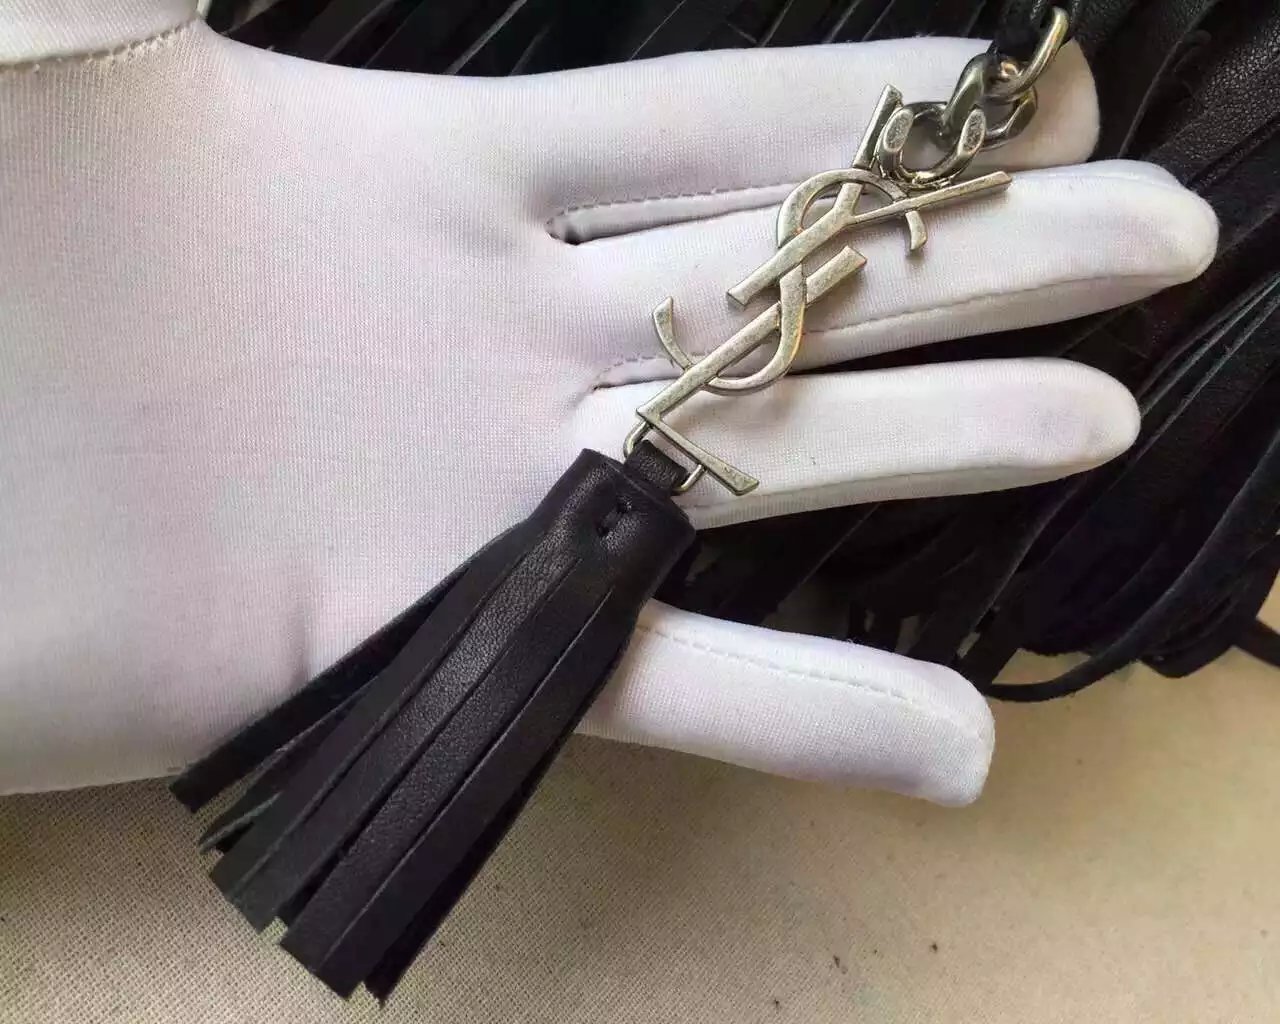 2015 New Saint Laurent Bag Cheap Sale-Saint Laurent Emmanuelle Fringed Bucket Bag in Black Leather - Click Image to Close